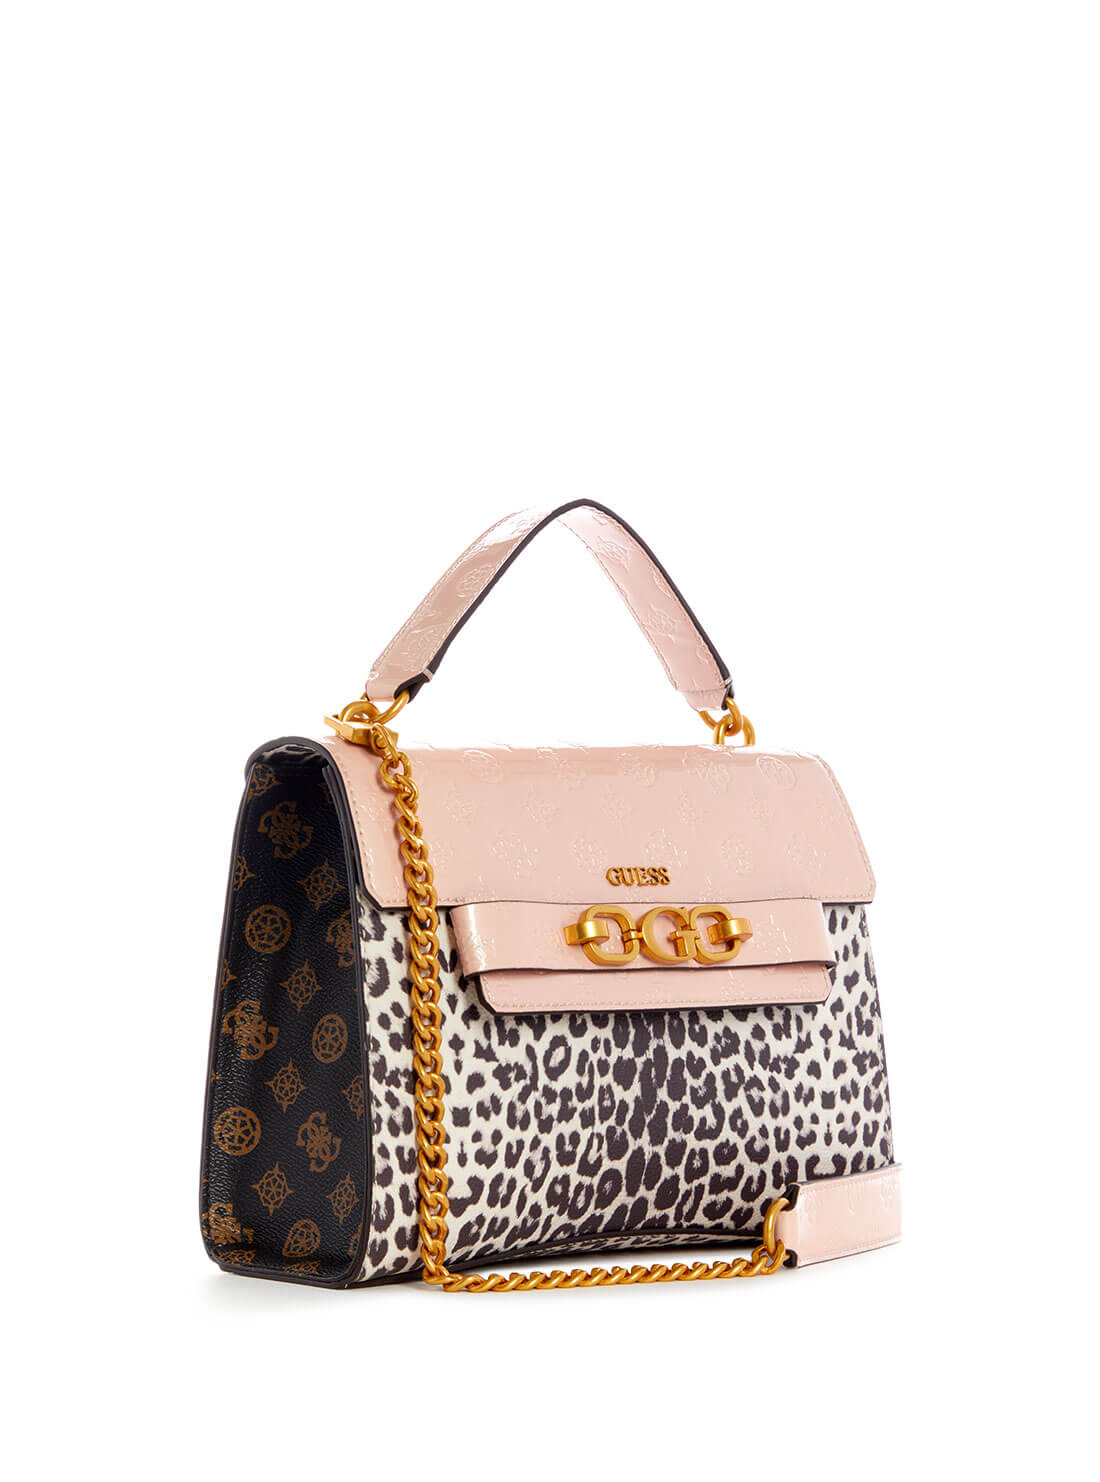 Guess leopard purse - Gem